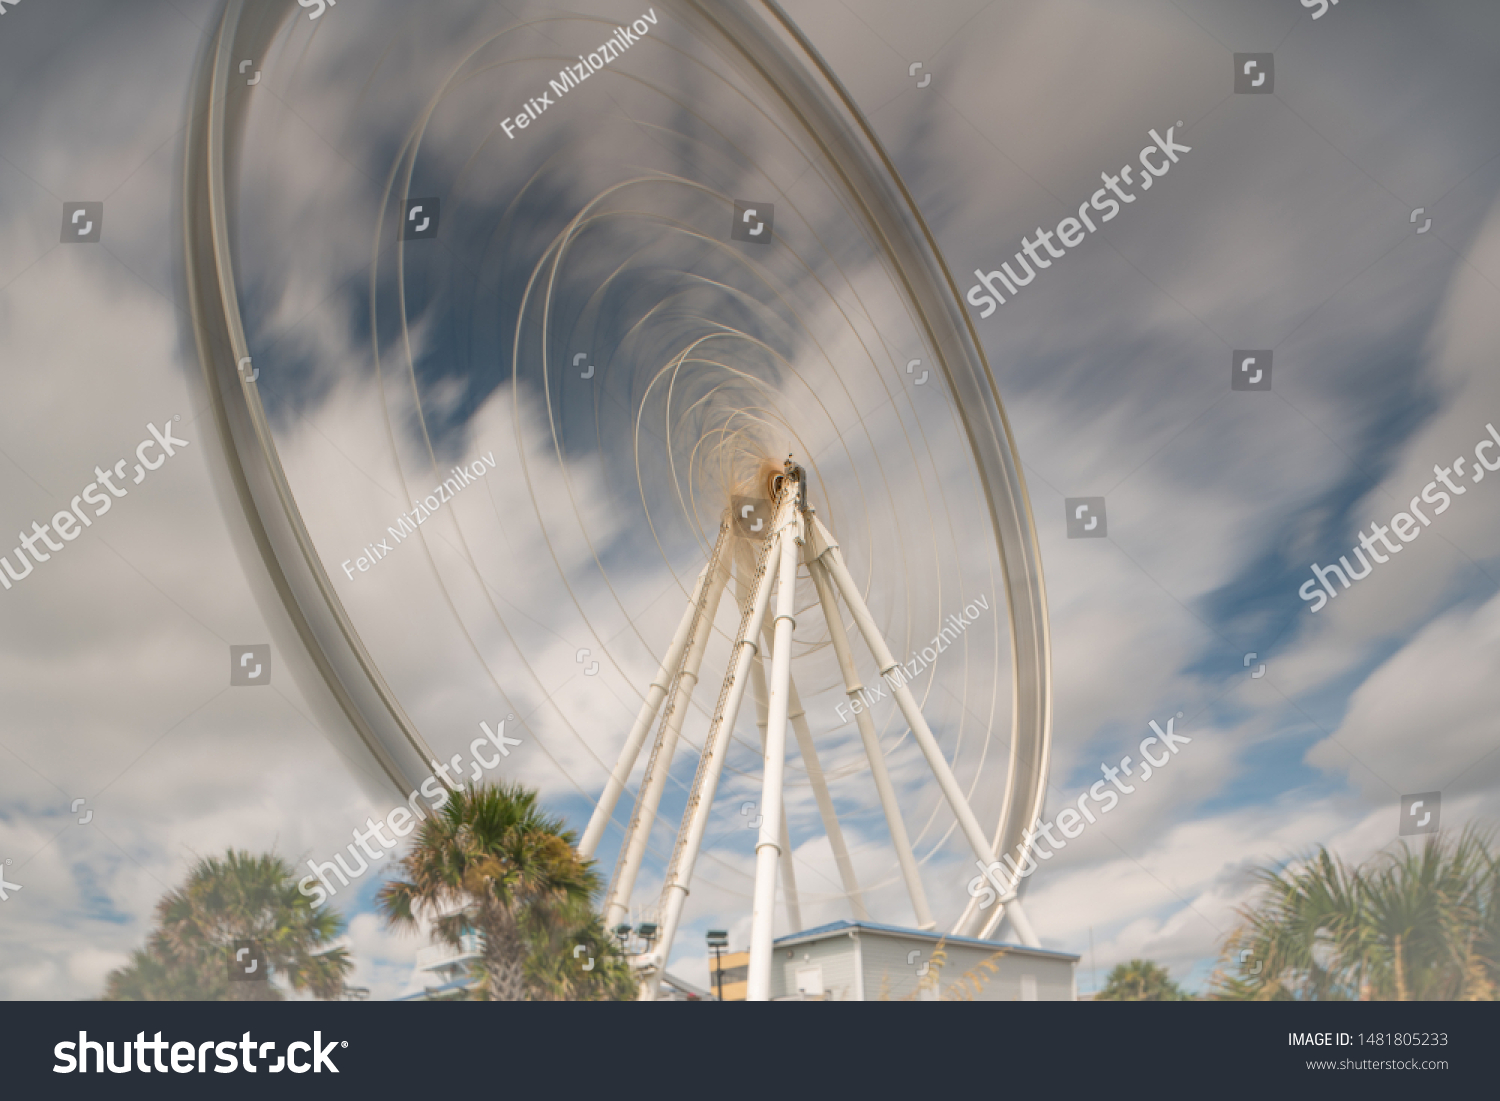 Long exposure ferris wheel in motion #1481805233